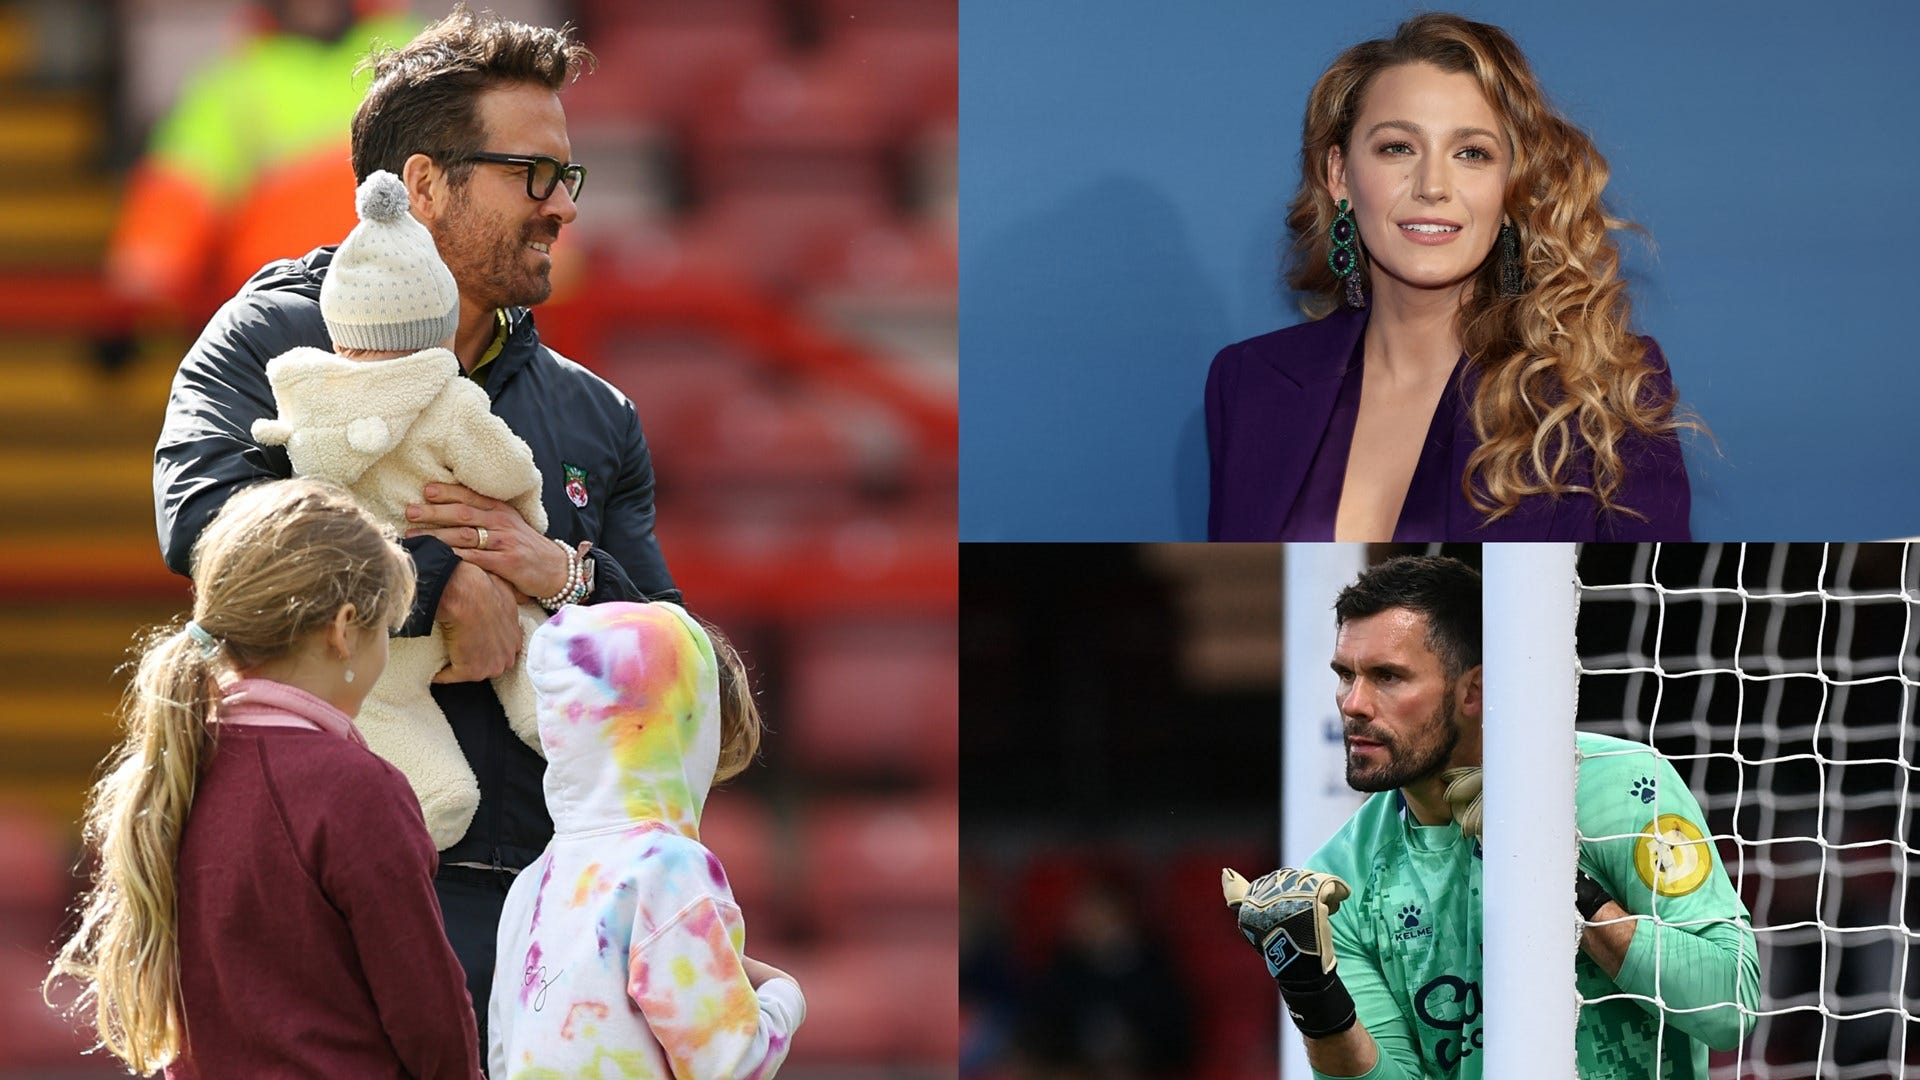 Ryan Reynolds' children & wife Blake Lively attend Wrexham's clash with